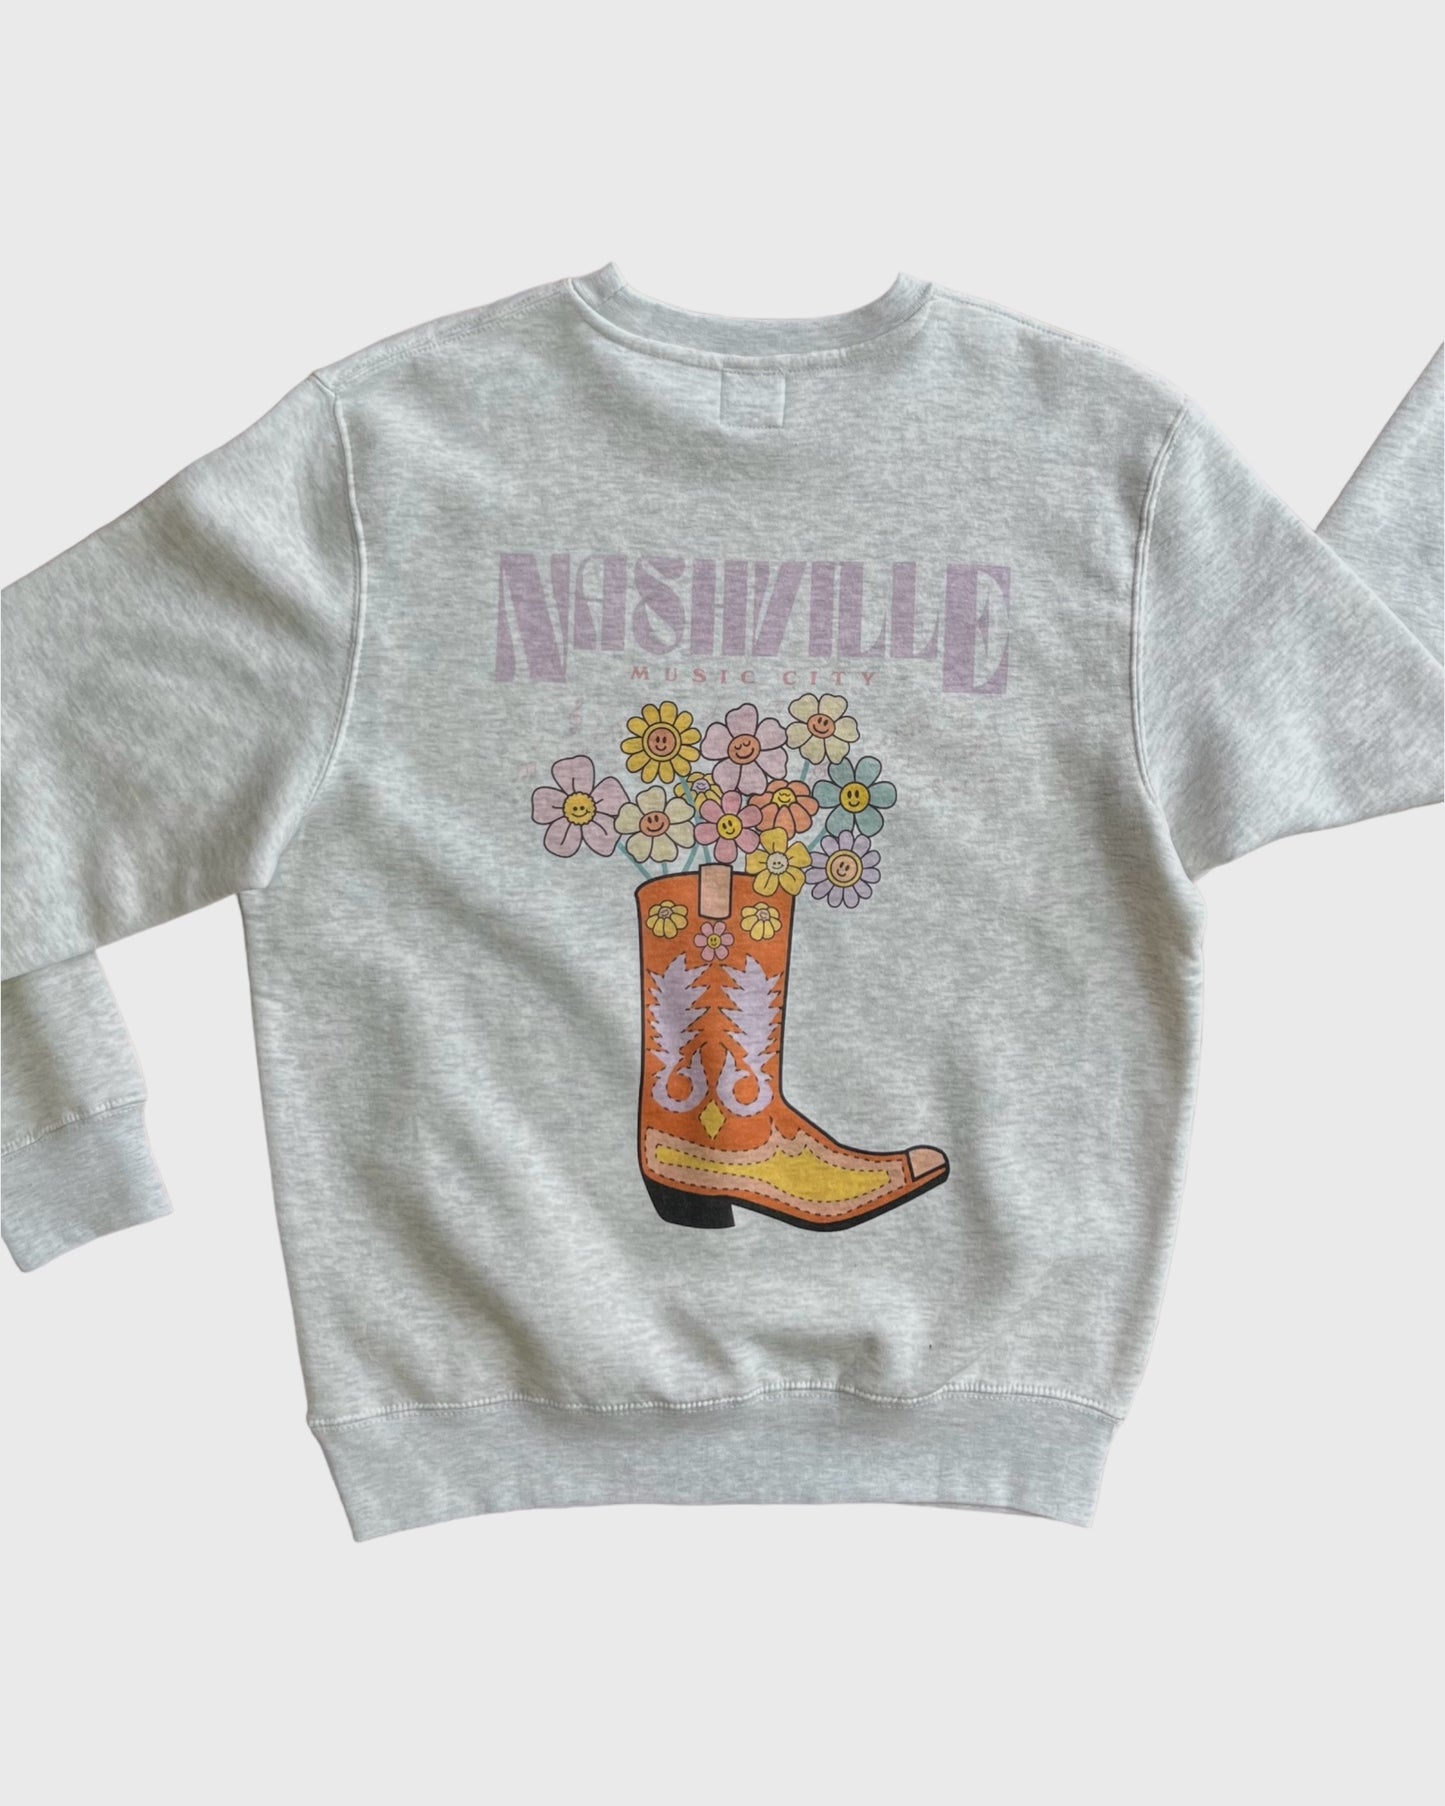 Nashville Music City Floral Boot Graphic Crewneck Sweatshirt